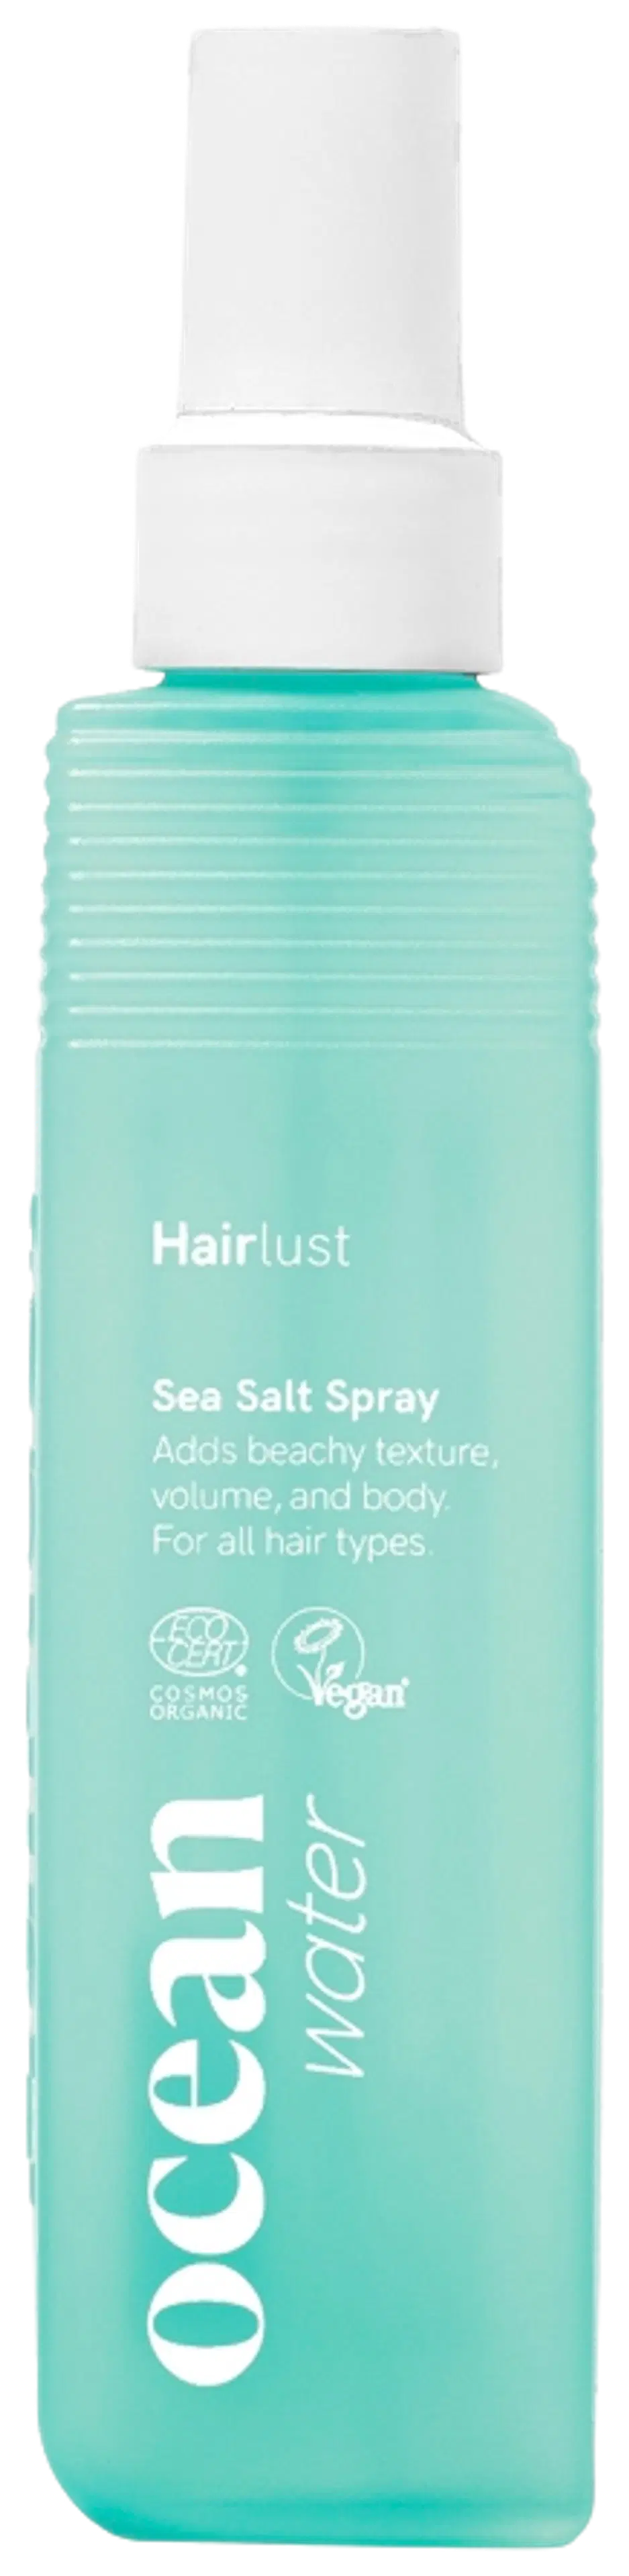 Hairlust Ocean Water Sea Salt Spray suolasuihke 150 ml